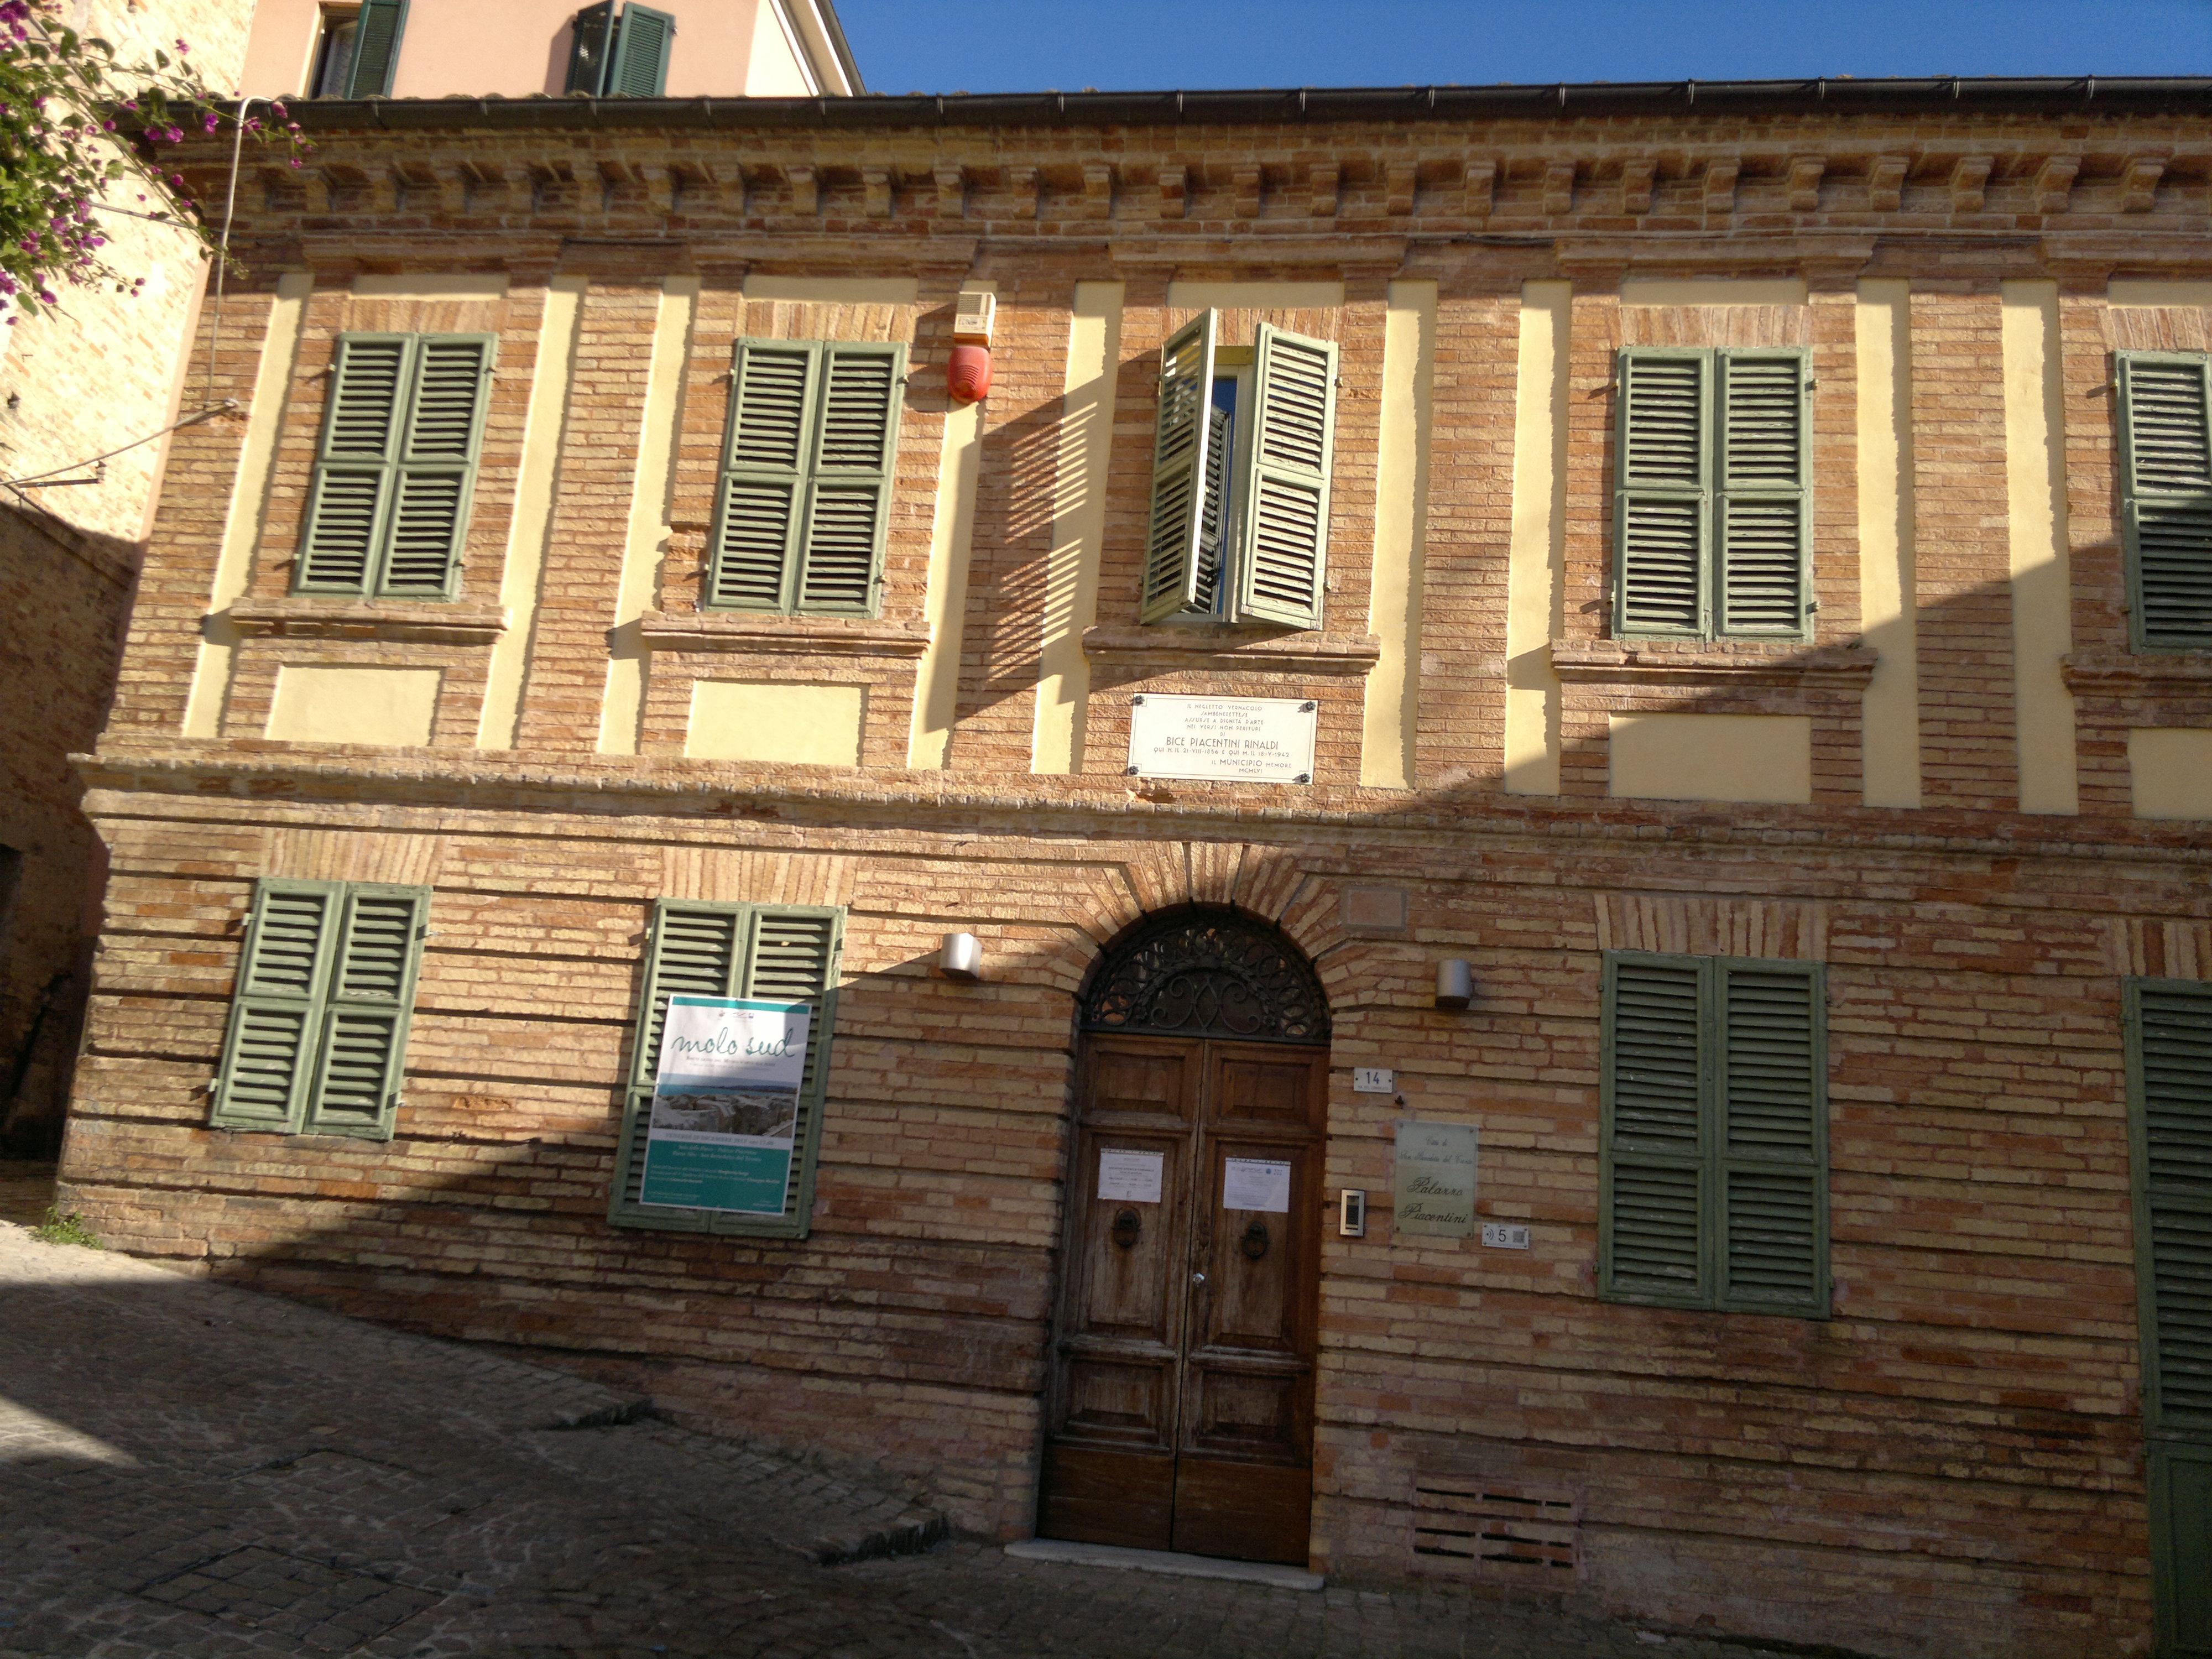 Palazzo Piacentini